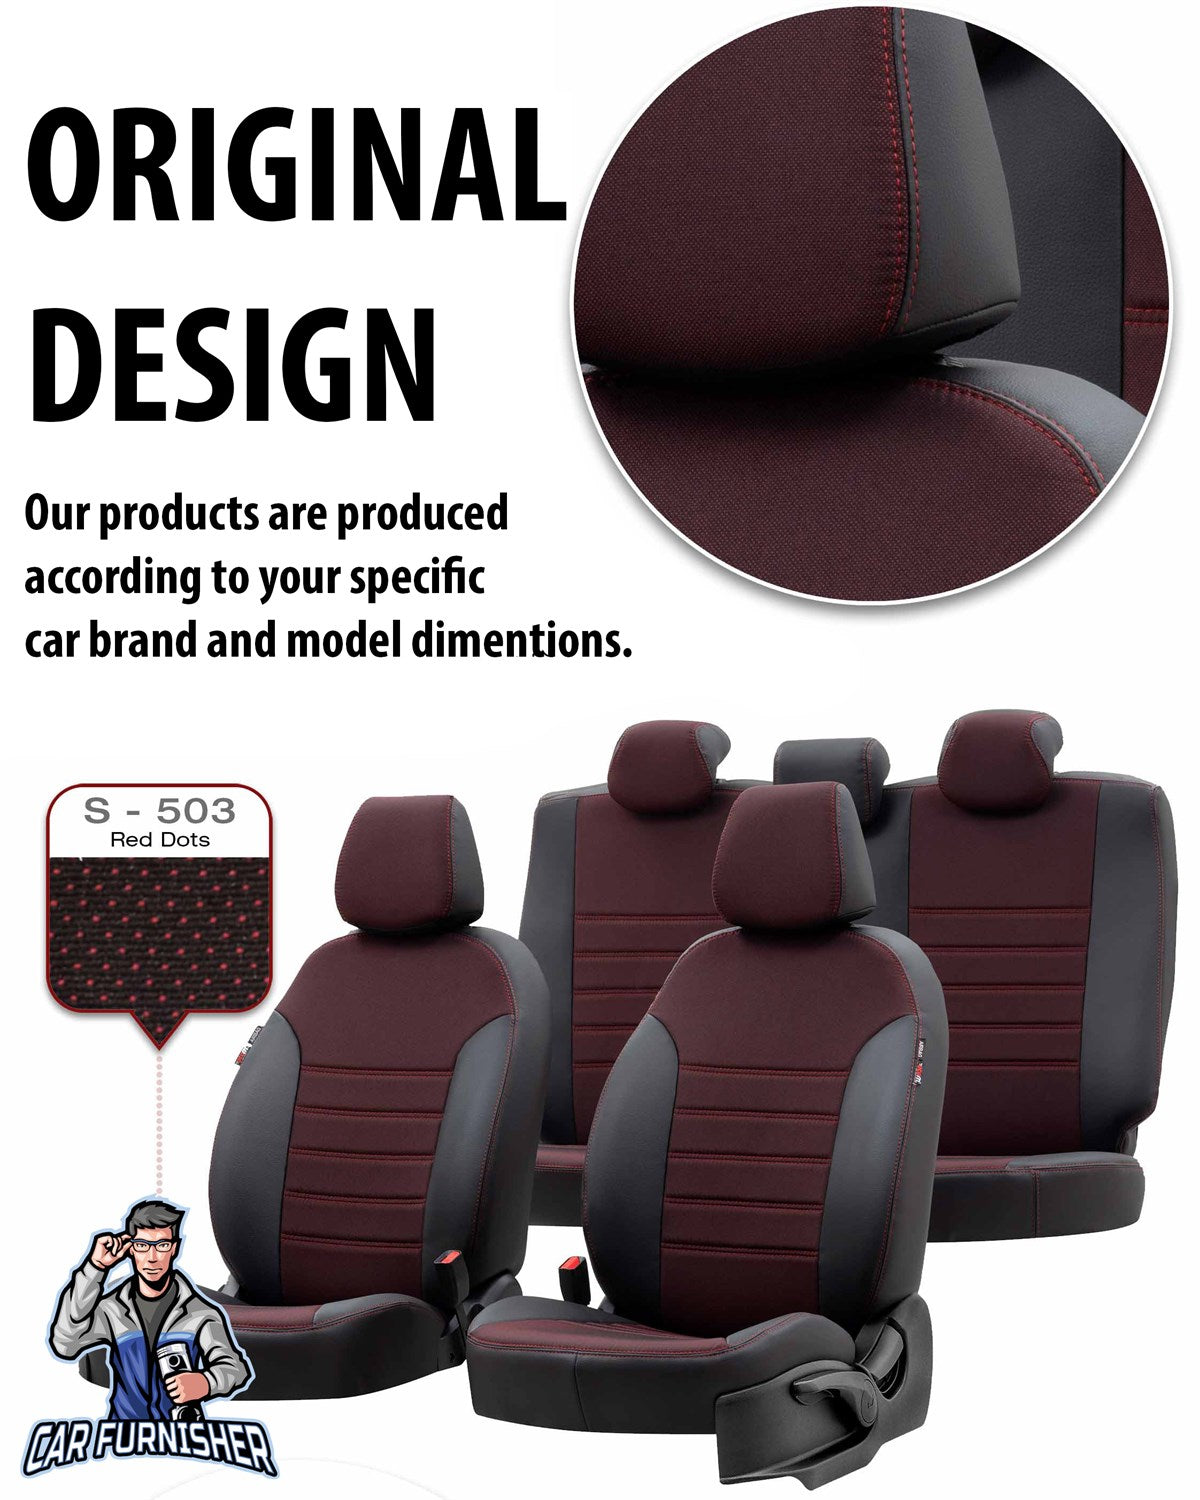 Toyota Auris Seat Cover Paris Leather & Jacquard Design Black Leather & Jacquard Fabric